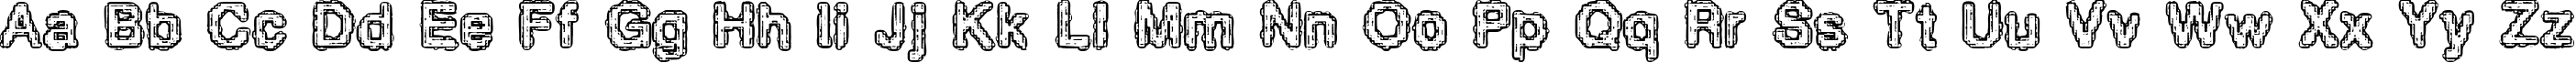 Пример написания английского алфавита шрифтом Pixel Krud BRK